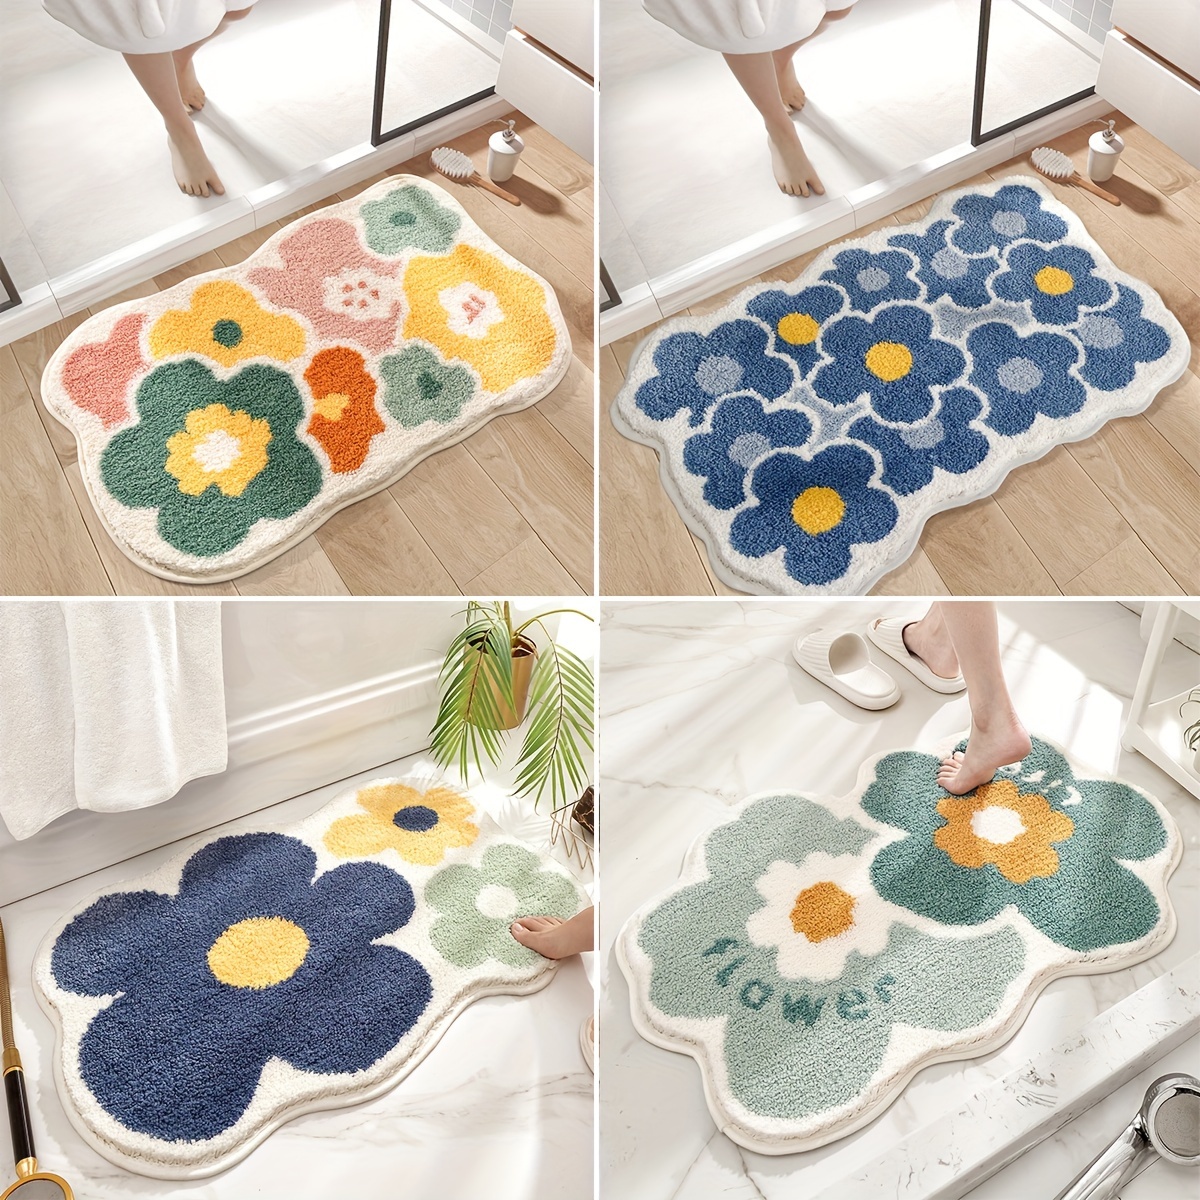 DeramHy home 1 Piece Cute Flower Bath Mat, Machine Washable Bath